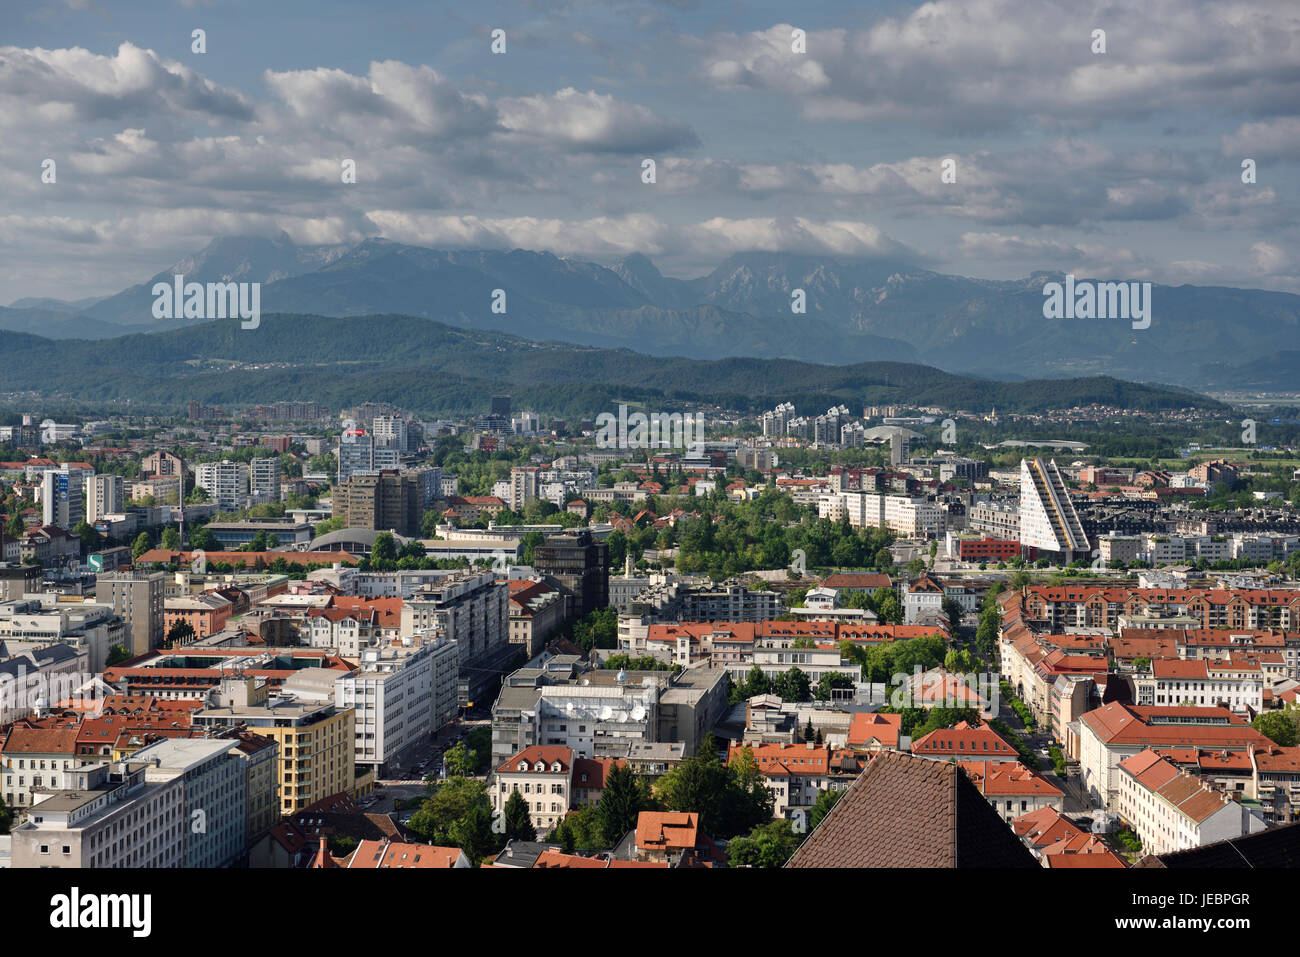 Overview of Ljubljana capital city of Slovenia with Mount Saint Mary and distant Kamnik Savinja Alps mountains from the hilltop Ljubljana Castle Stock Photo